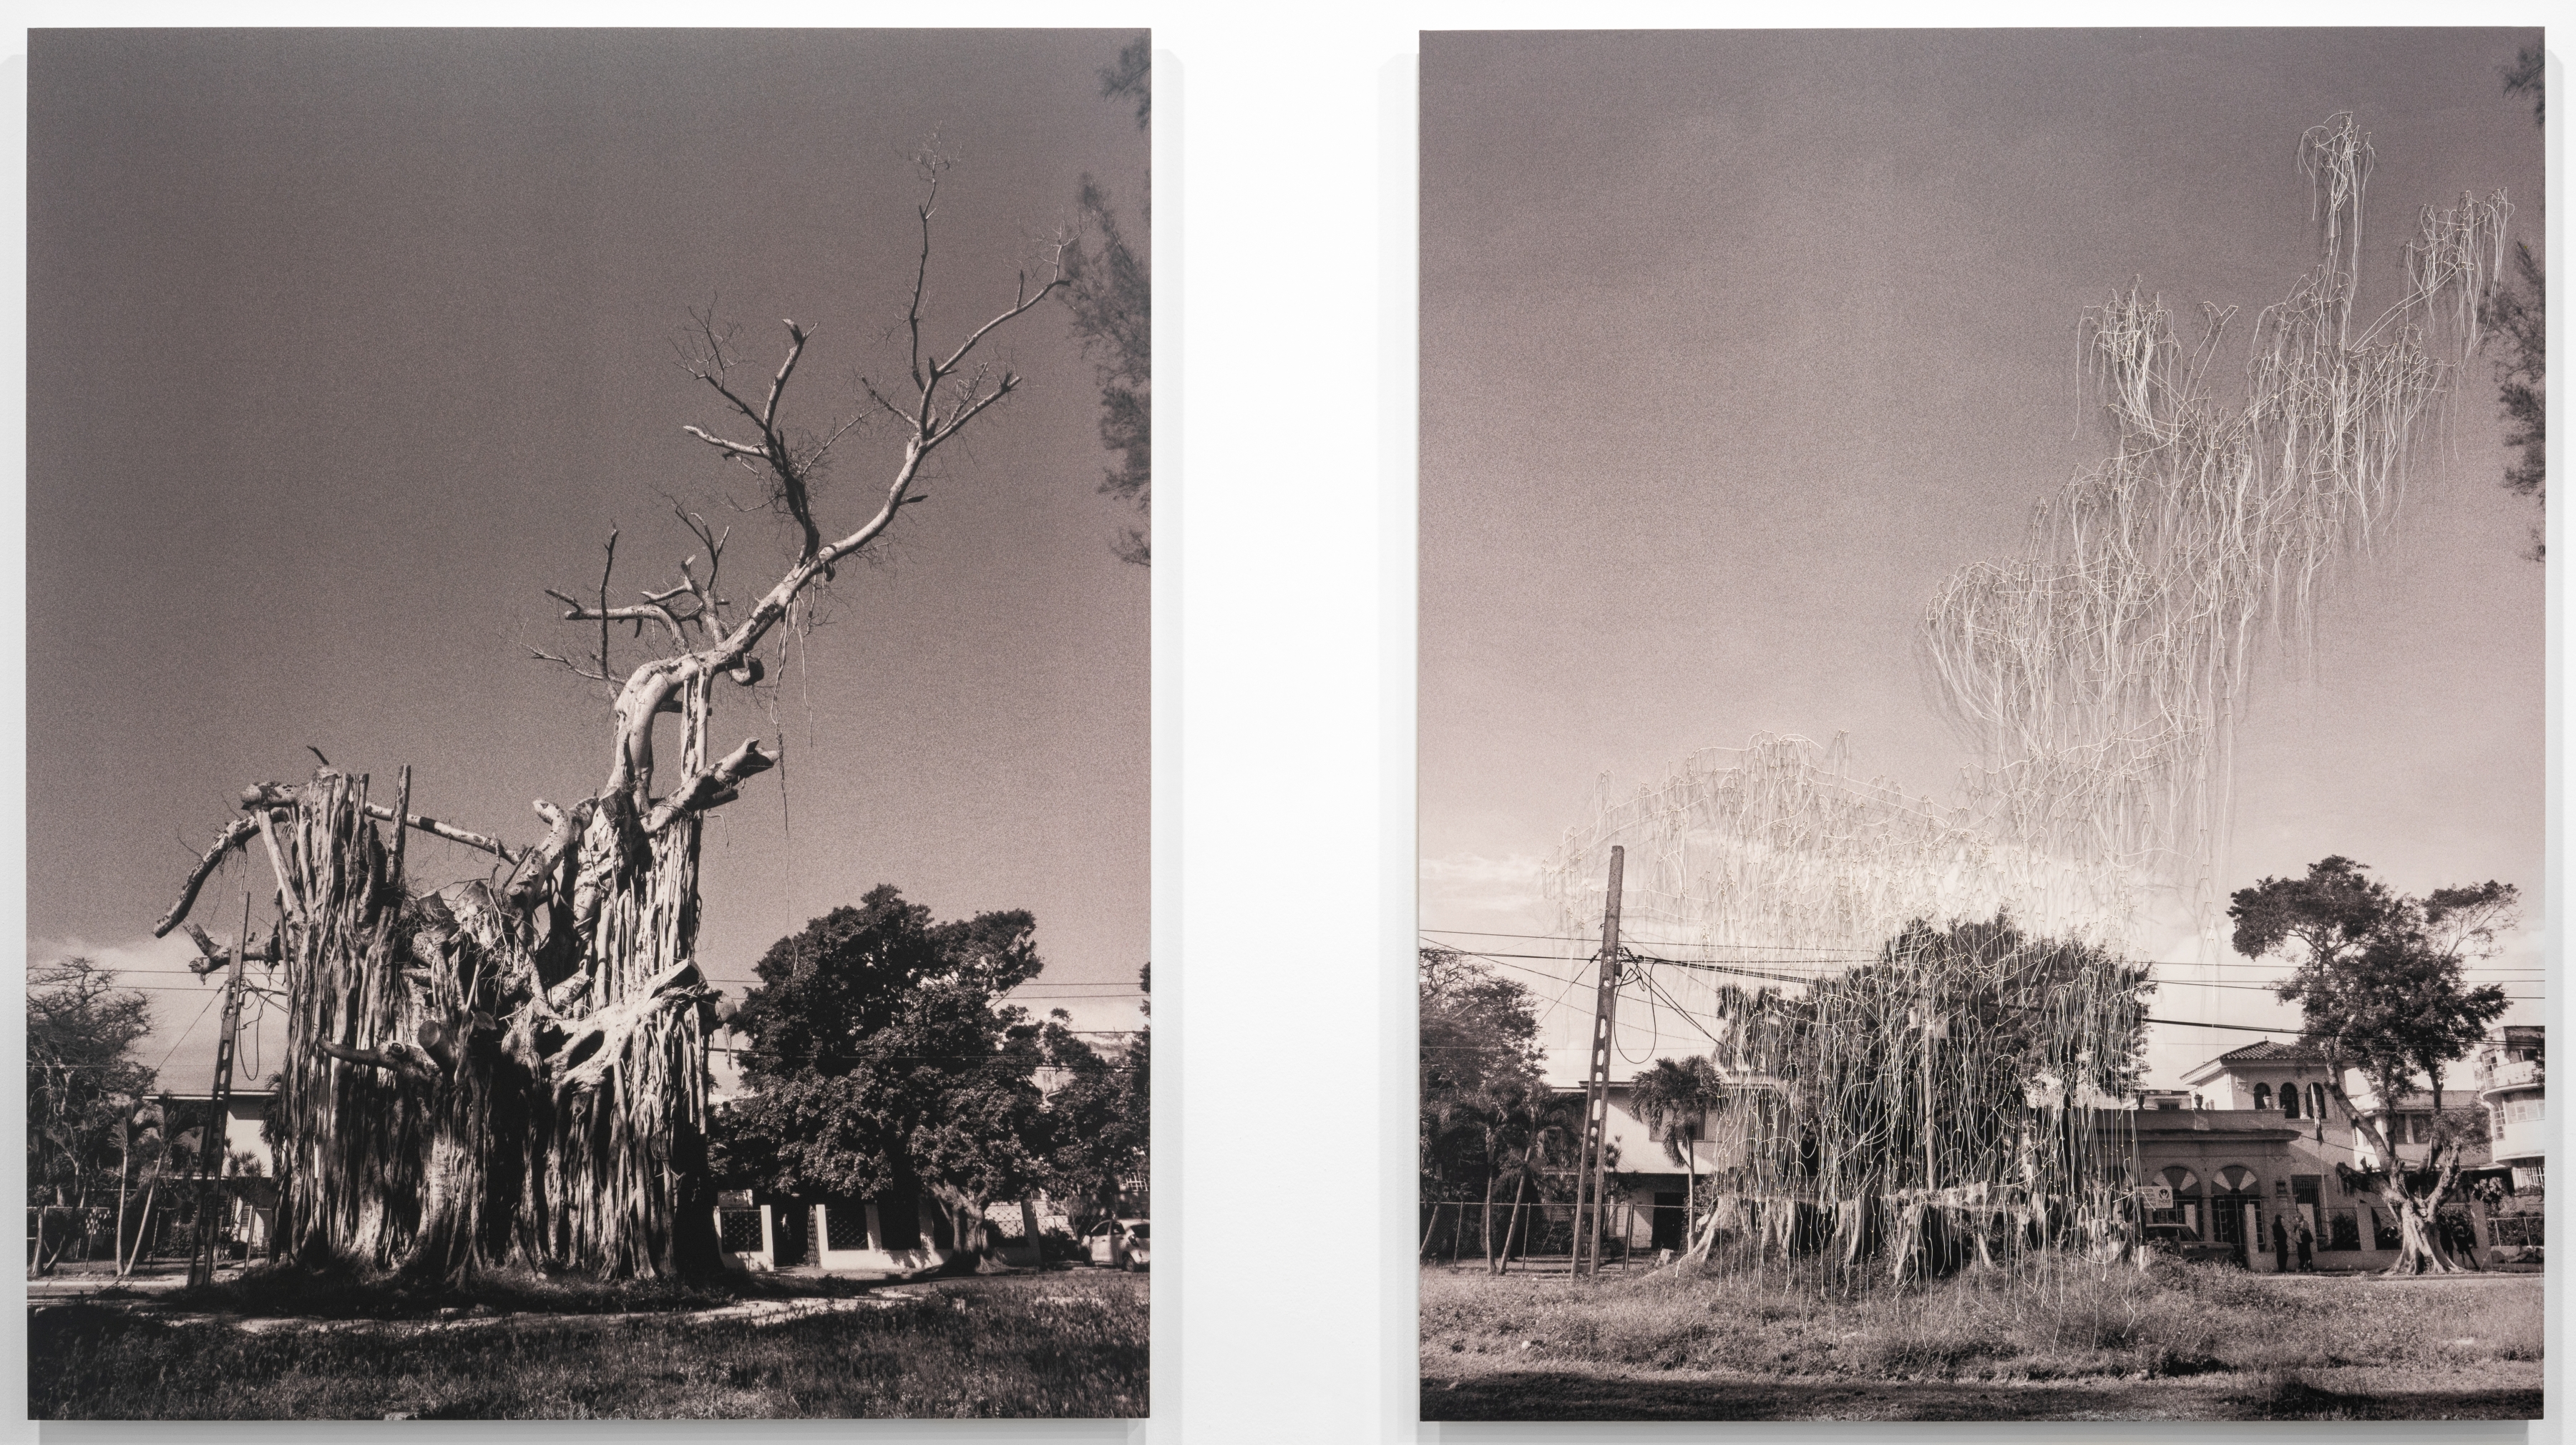 Carlos Garaicoa
Sin t&iacute;tulo (&Aacute;rbol) / Untitled (Tree)
2021
Pins and thread on lambda gator, diptych Work: 155 x 255 cm
Work (each): 155 x 125 cm
Unique

Sales enquiries